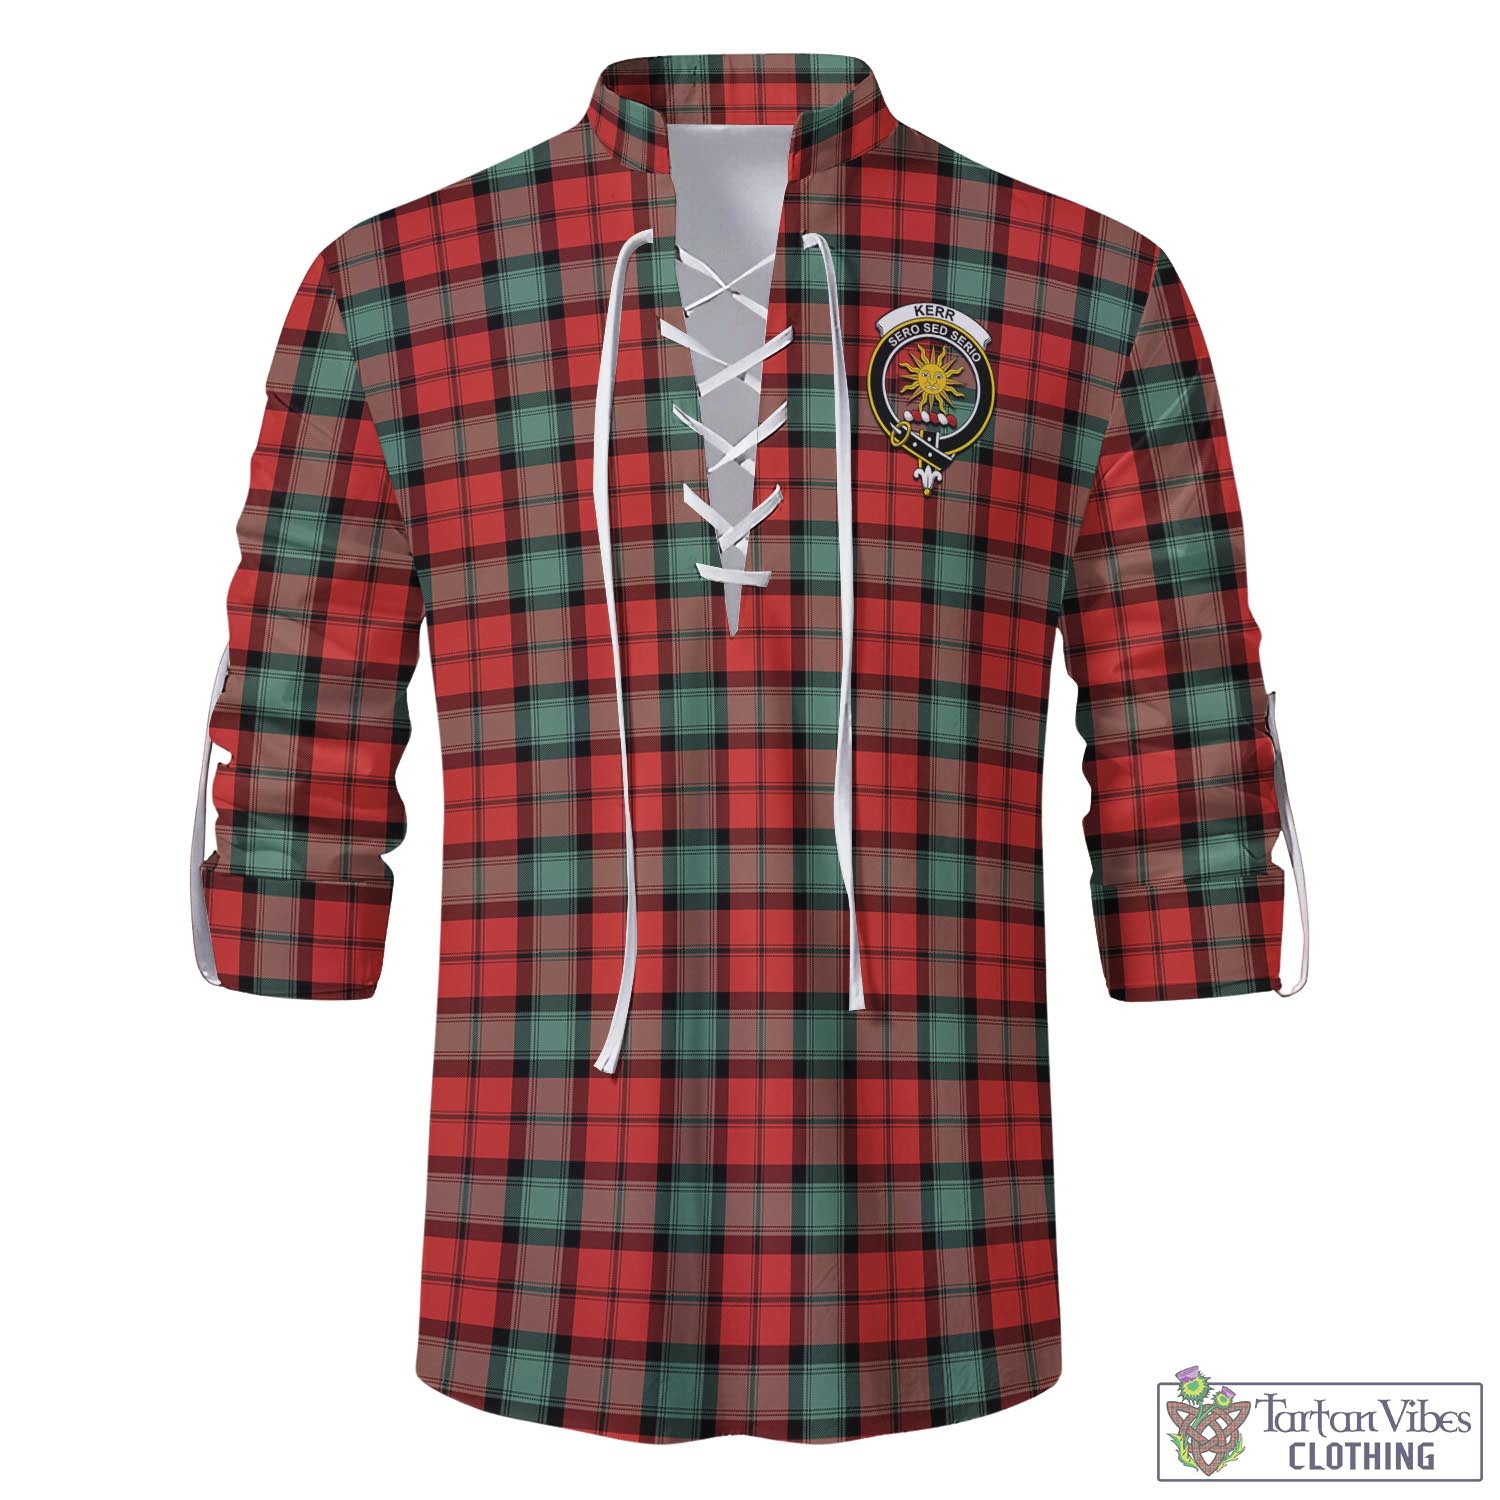 Tartan Vibes Clothing Kerr Ancient Tartan Men's Scottish Traditional Jacobite Ghillie Kilt Shirt with Family Crest